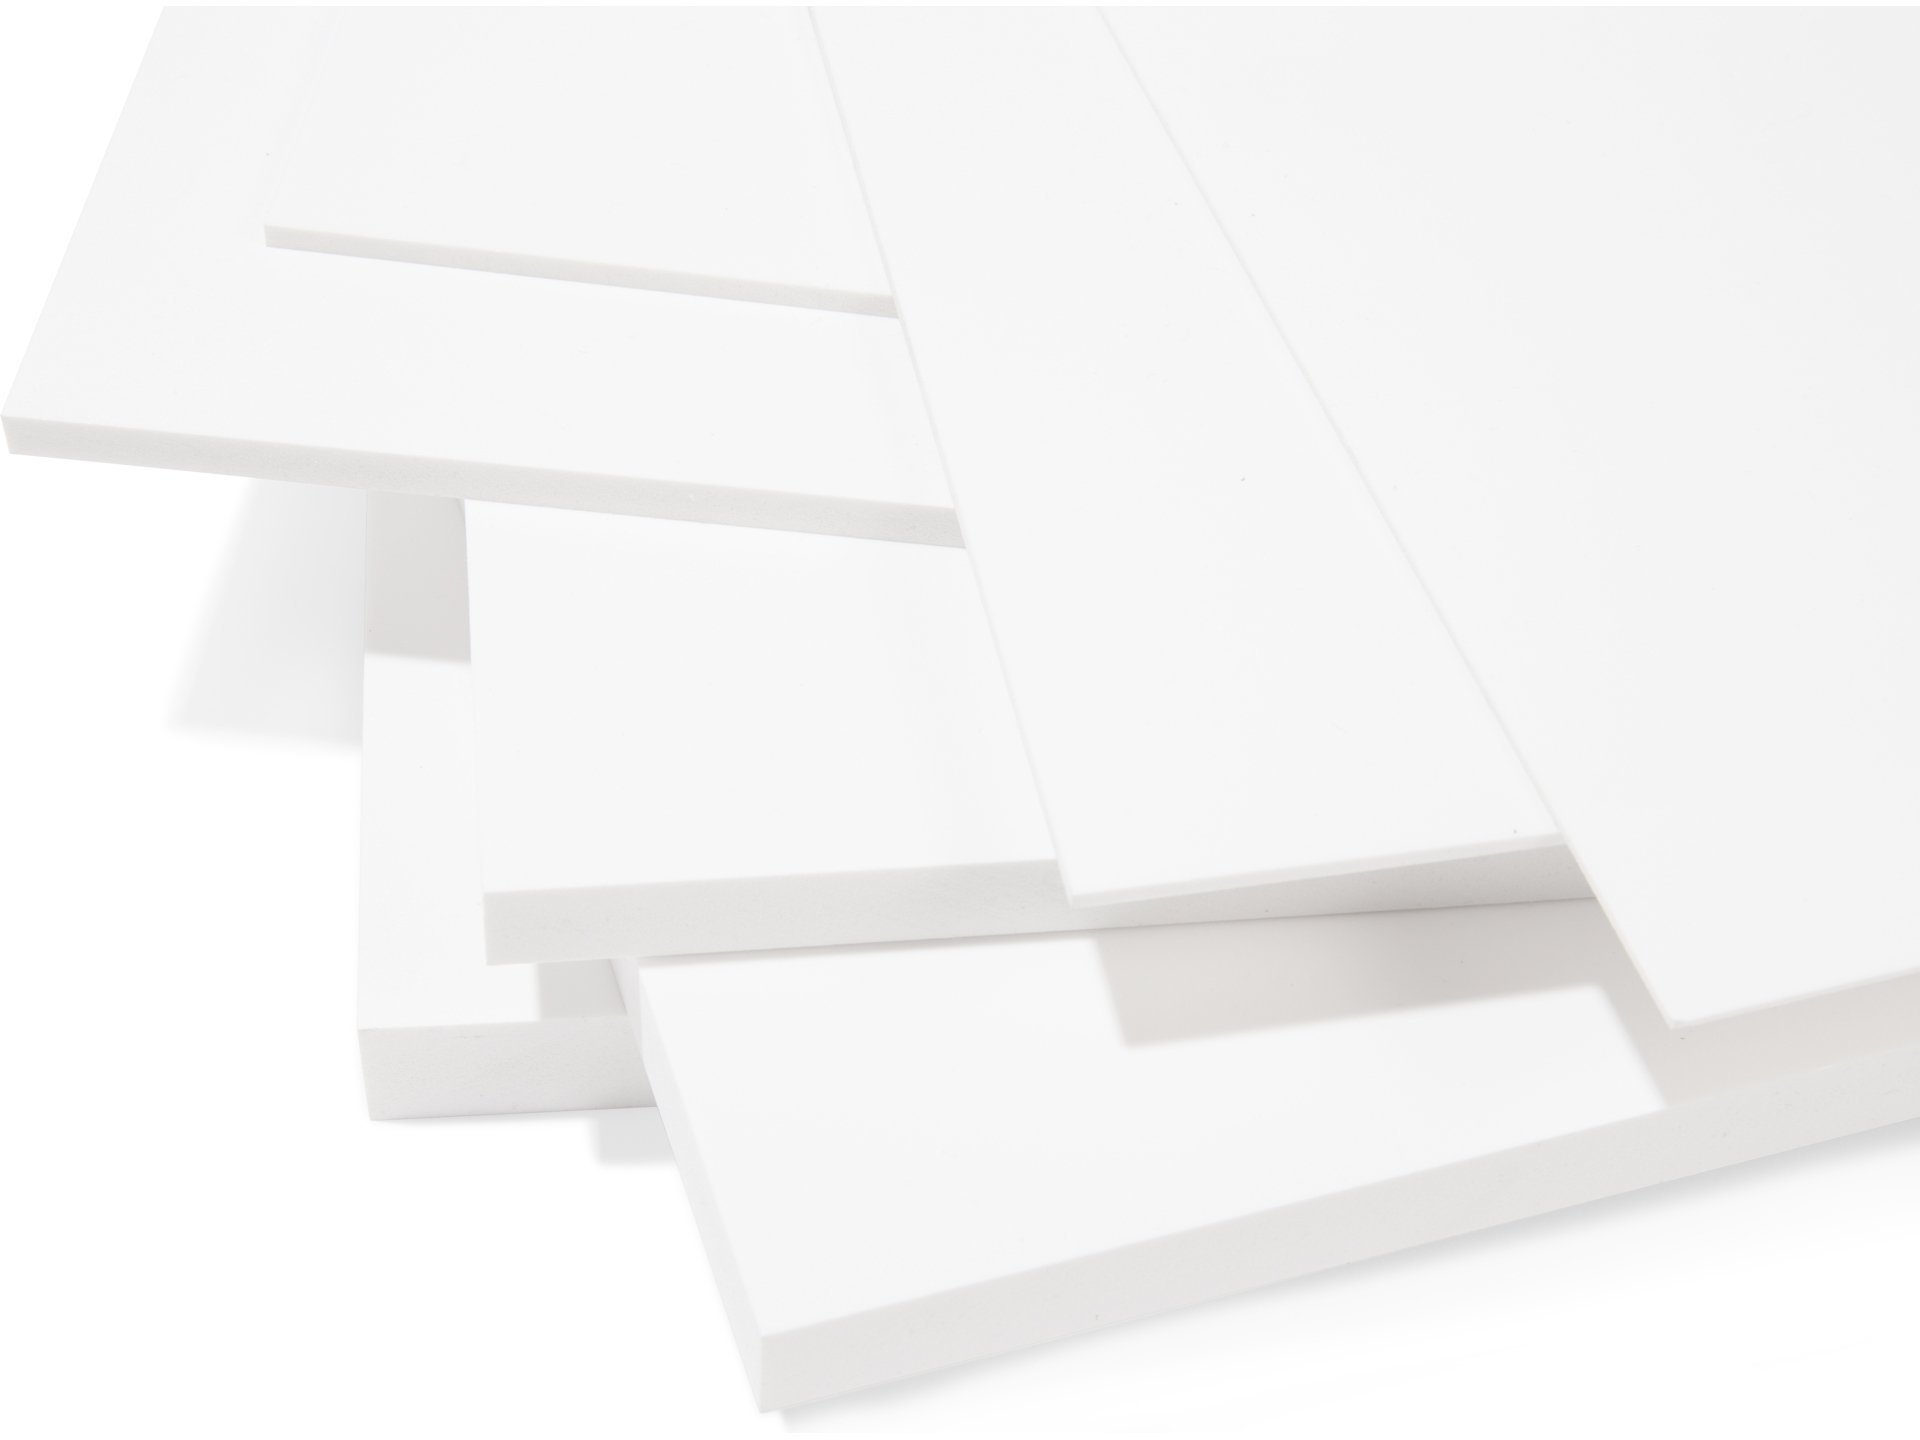 FOREX® Classic 3mm PVC-Freischaumplatte Weiß RAL9016 Seidenmatt Bastlerplatten 